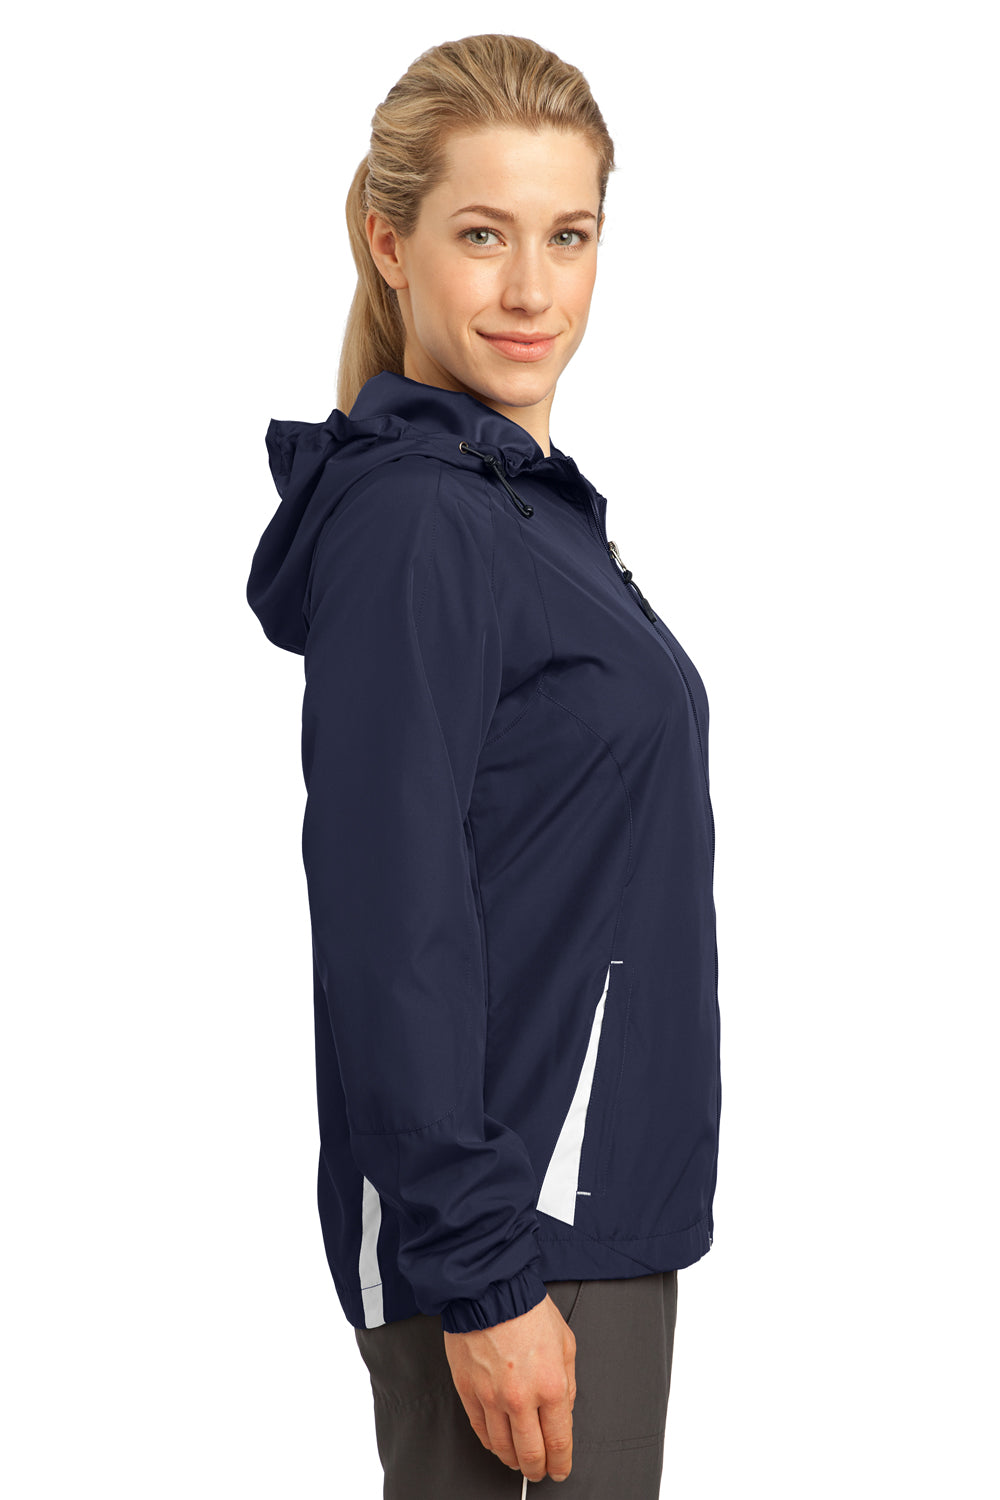 Sport-Tek LST76 Womens Water Resistant Full Zip Hooded Jacket Navy Blue Side